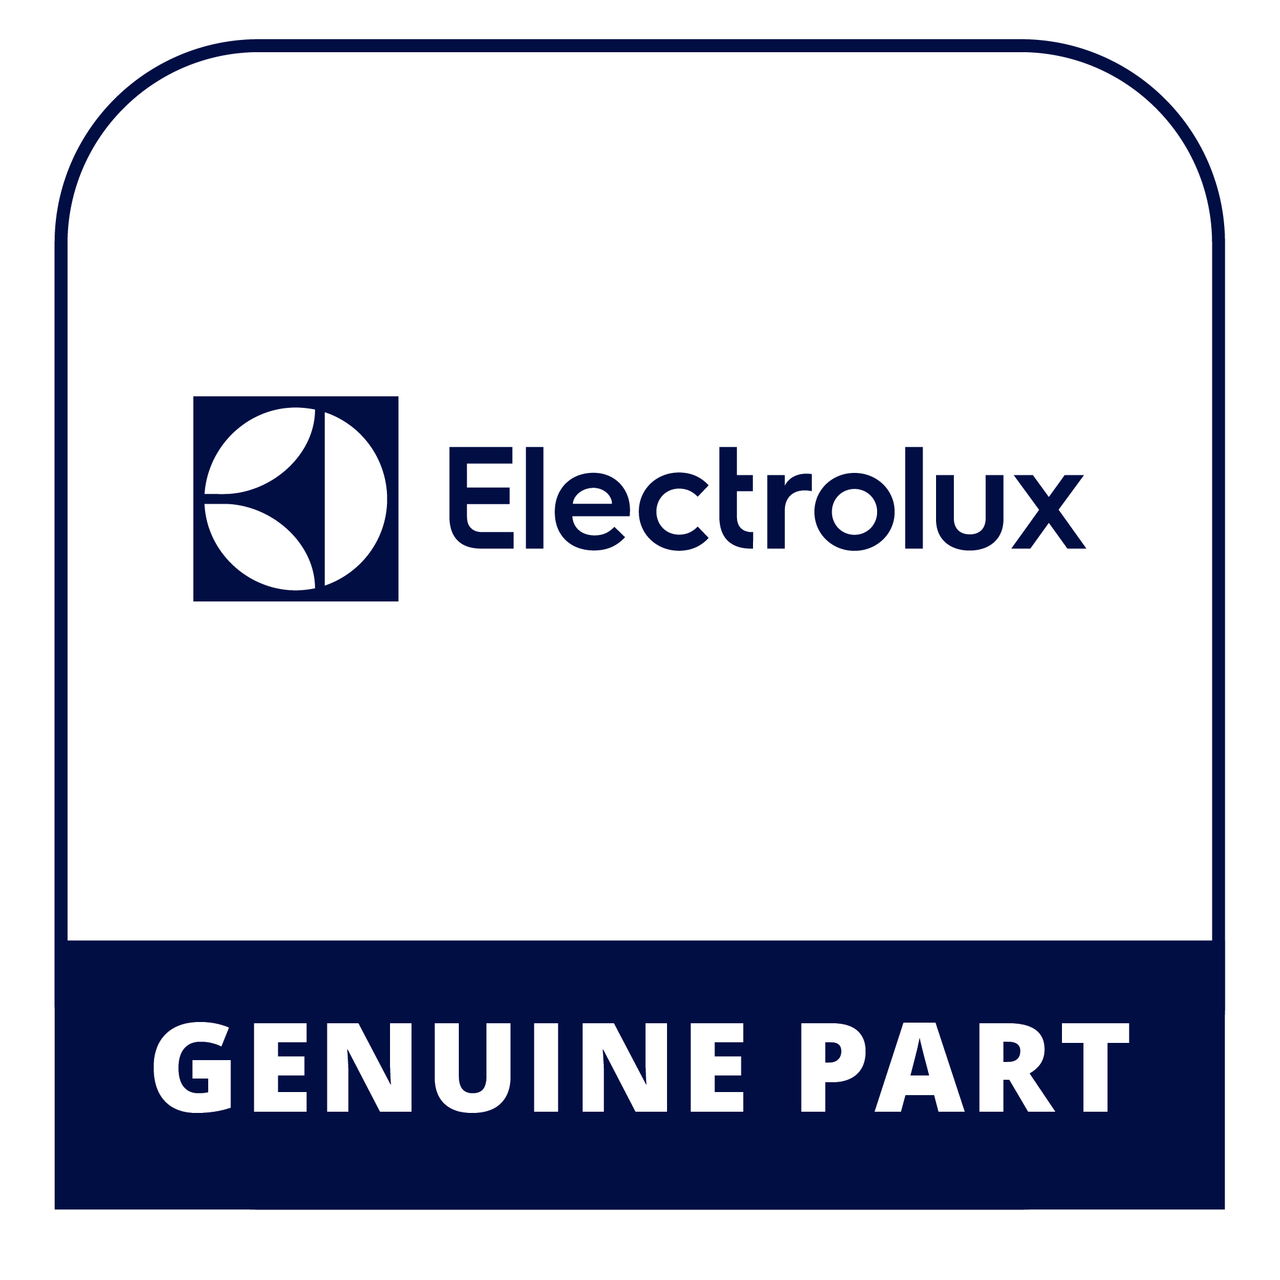 Frigidaire - Electrolux 318391100 Thumb Screw - Genuine Electrolux Part